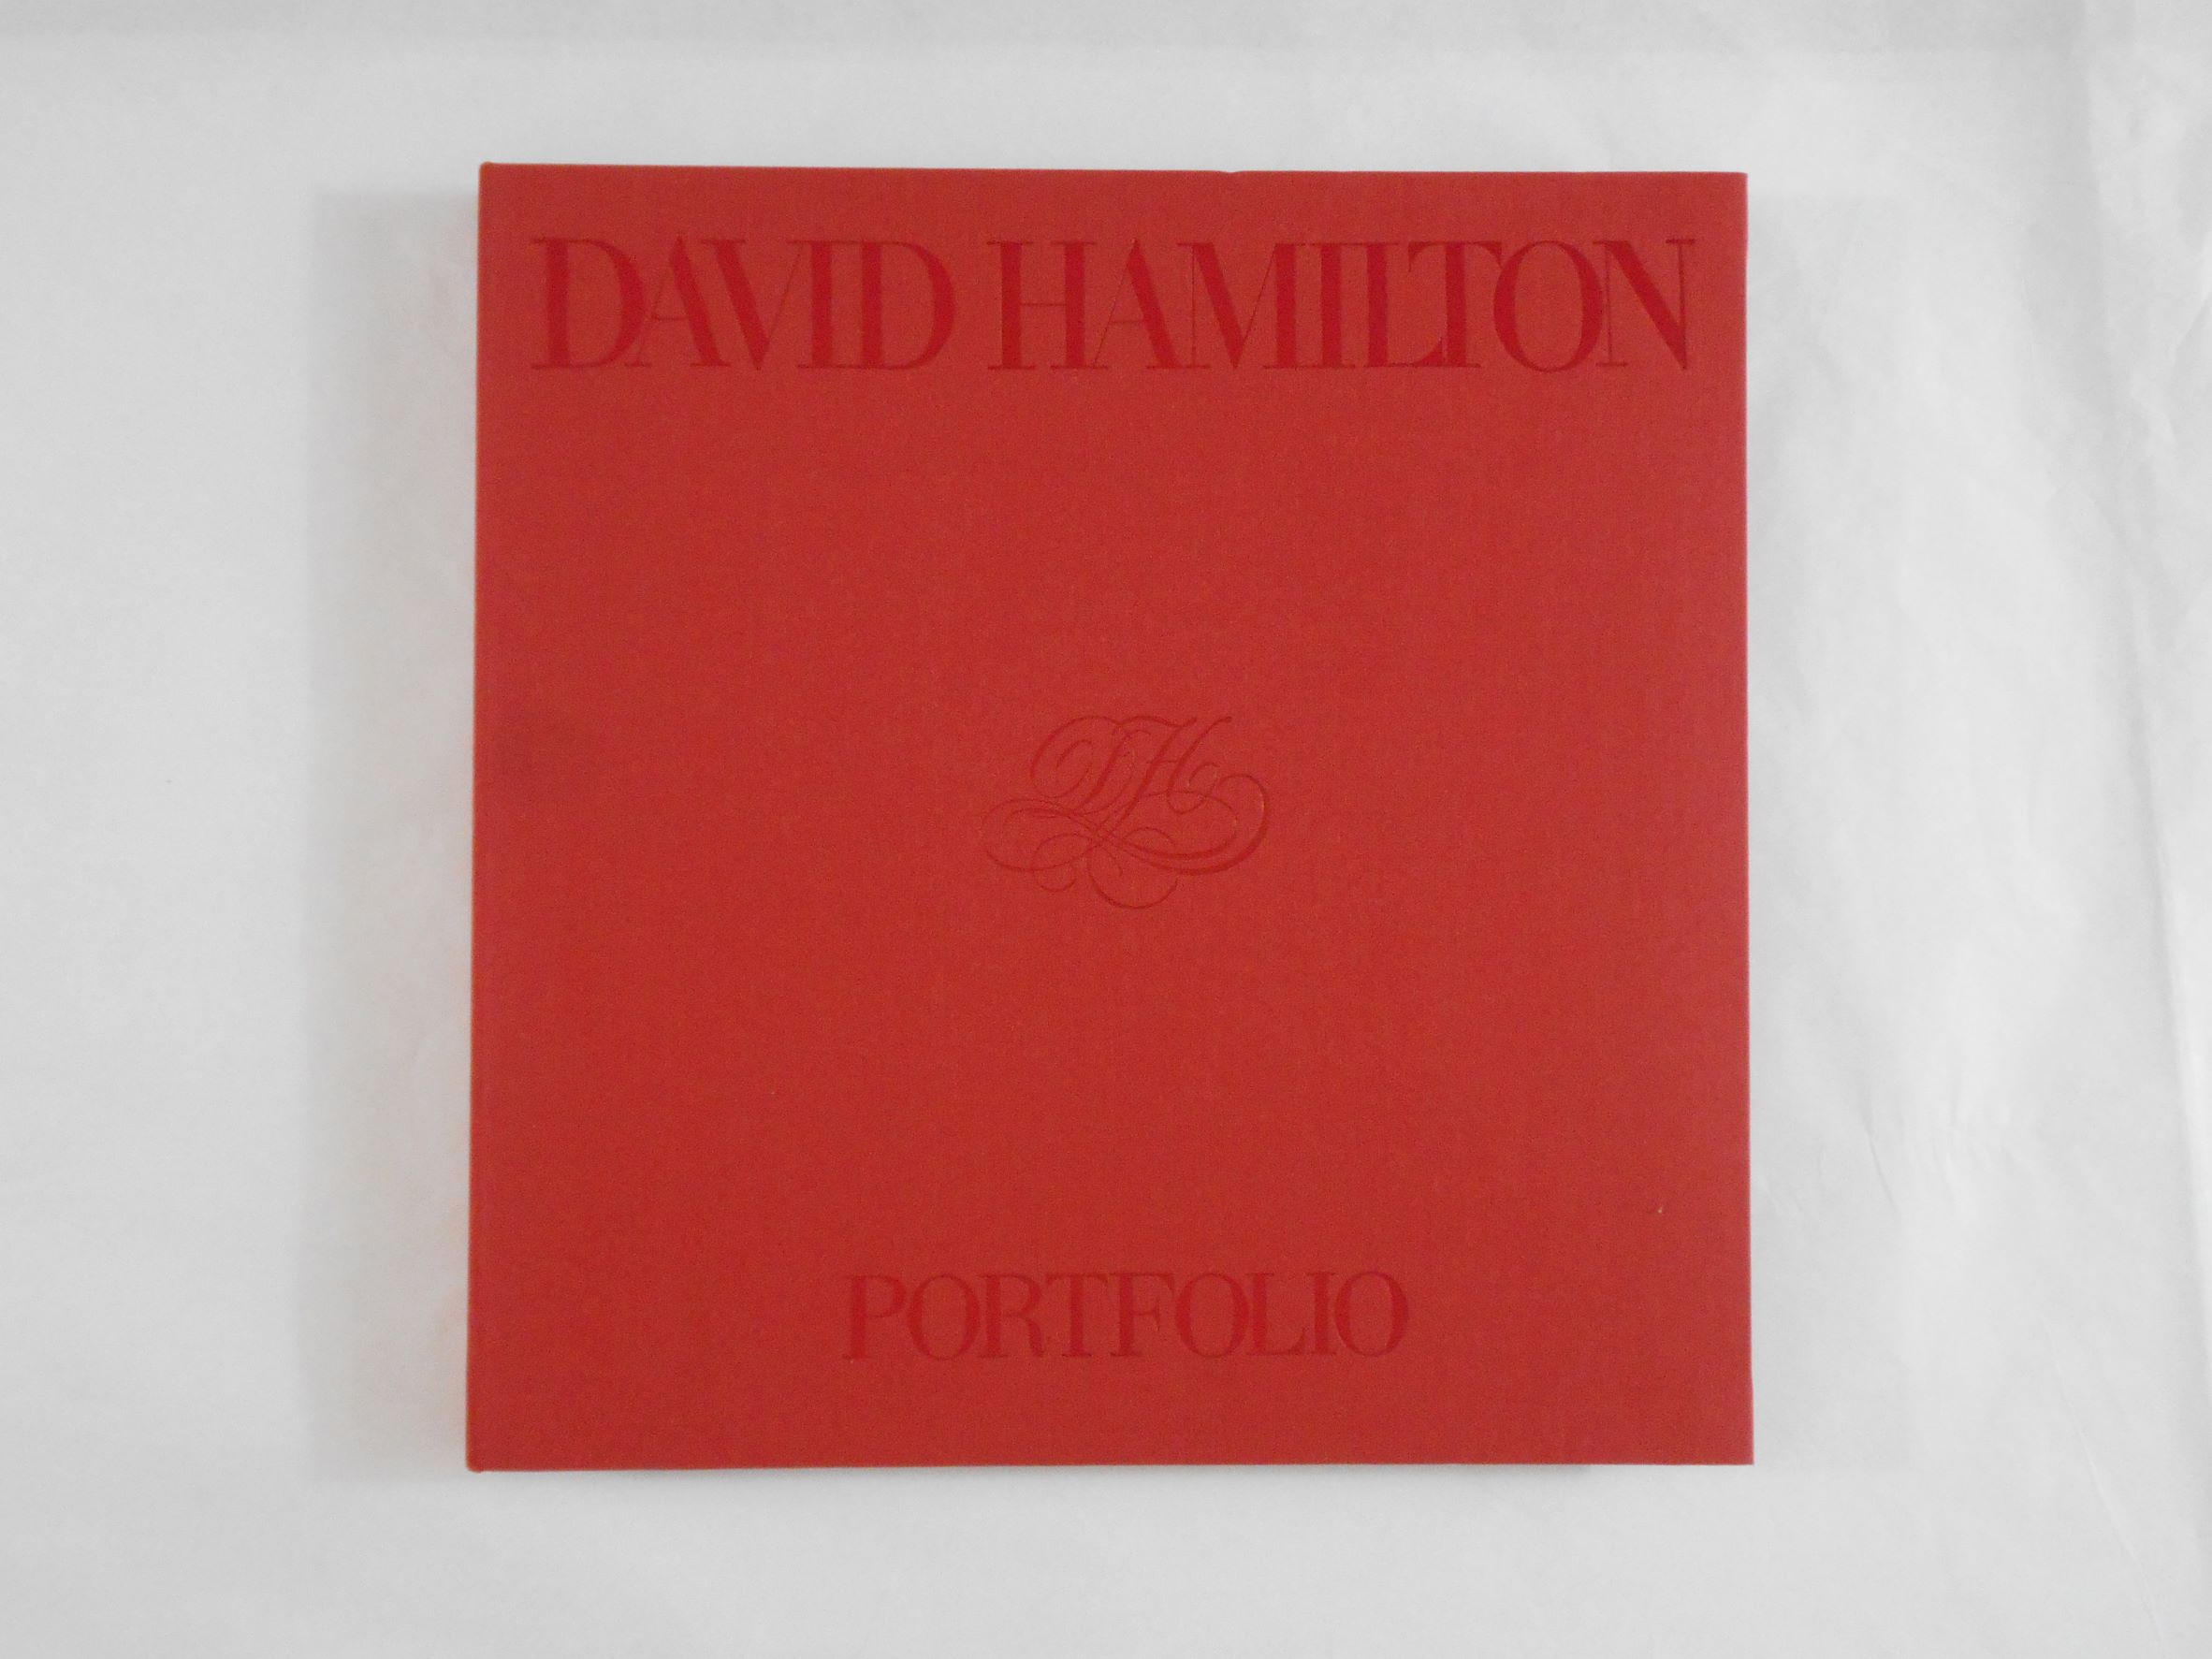 Portfolio Red David Hamilton Japanese Photobooksnude And Erotica 